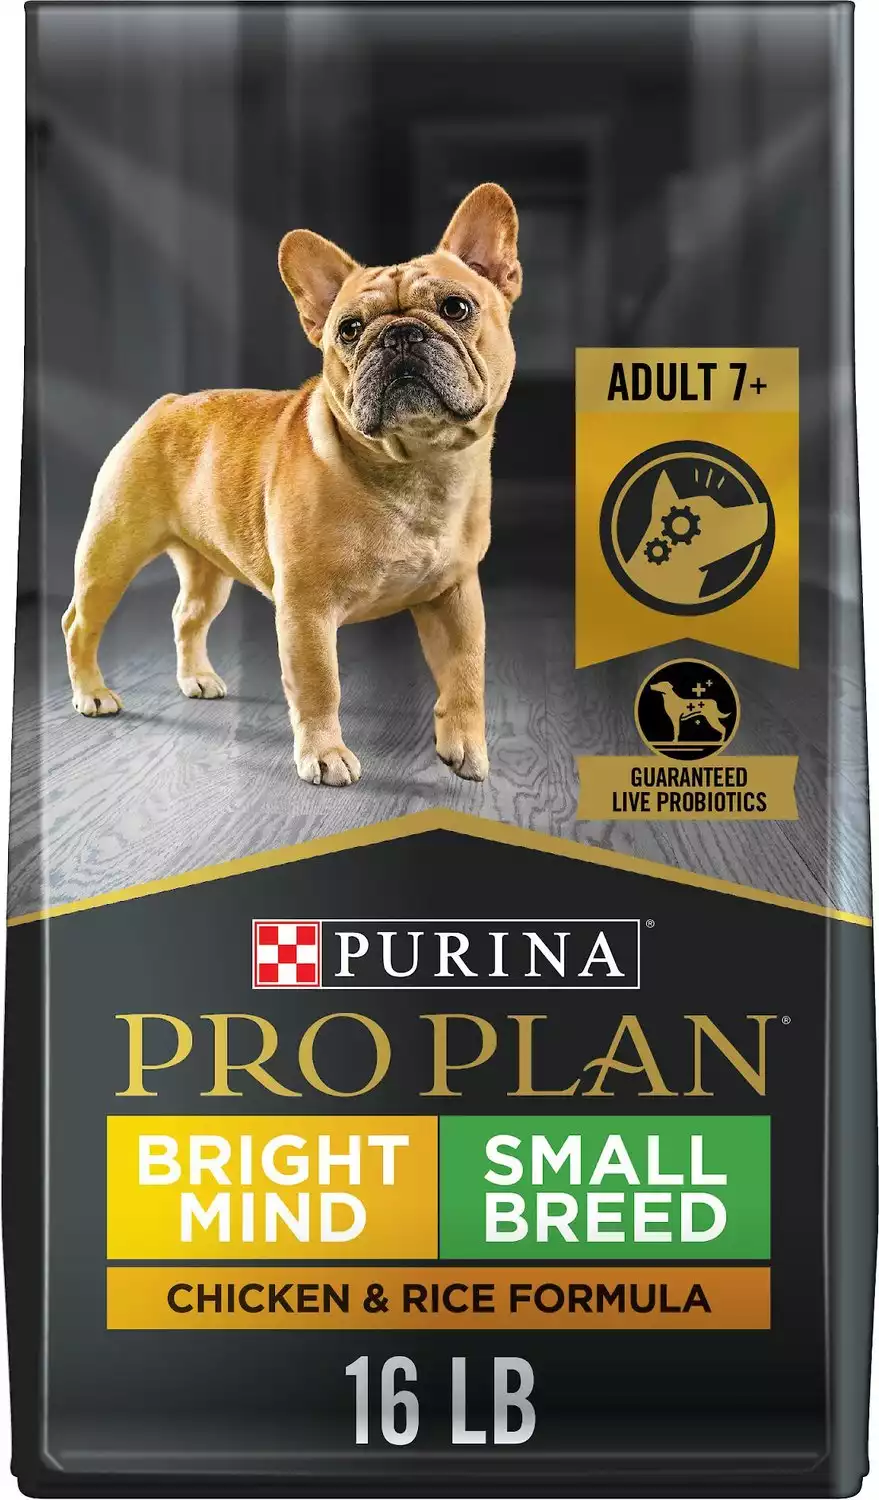 Purina Pro Plan Bright Mind Adult 7+ Small Breed Formula